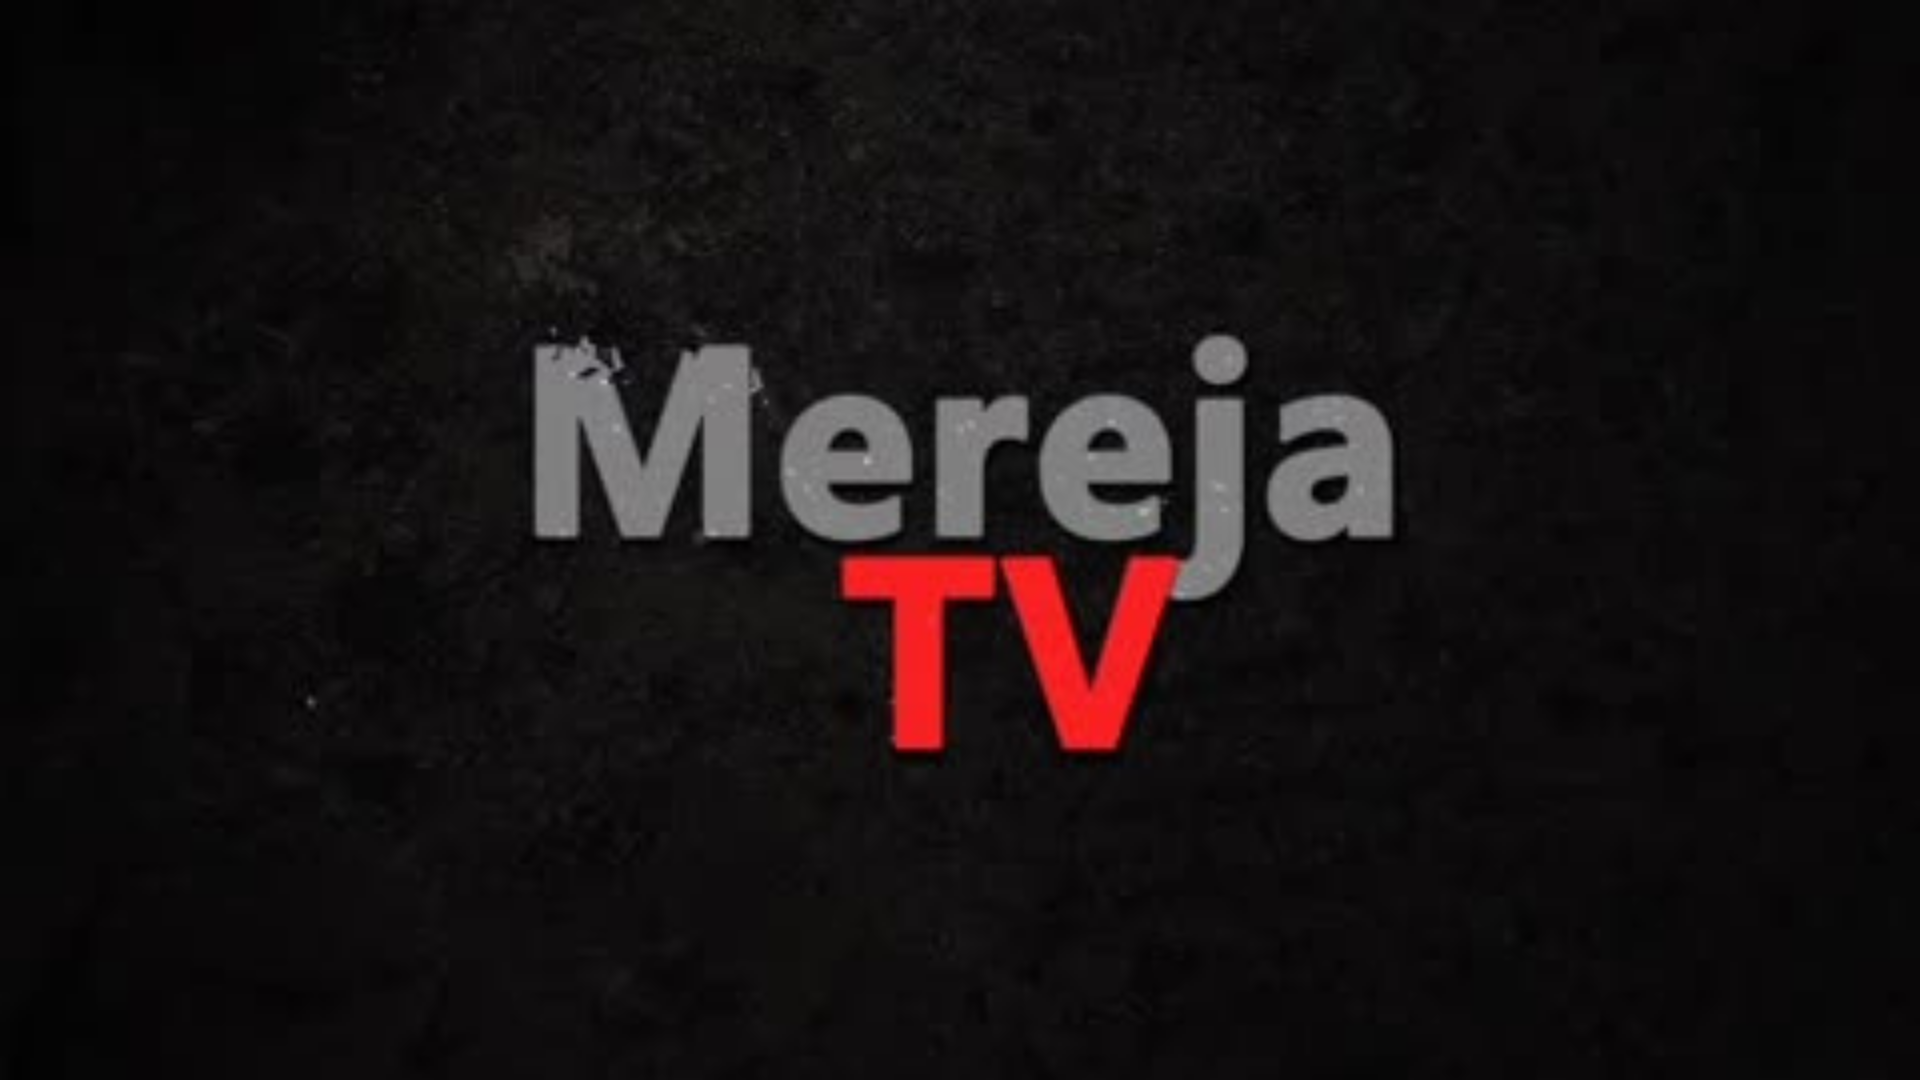 MEREJA TV